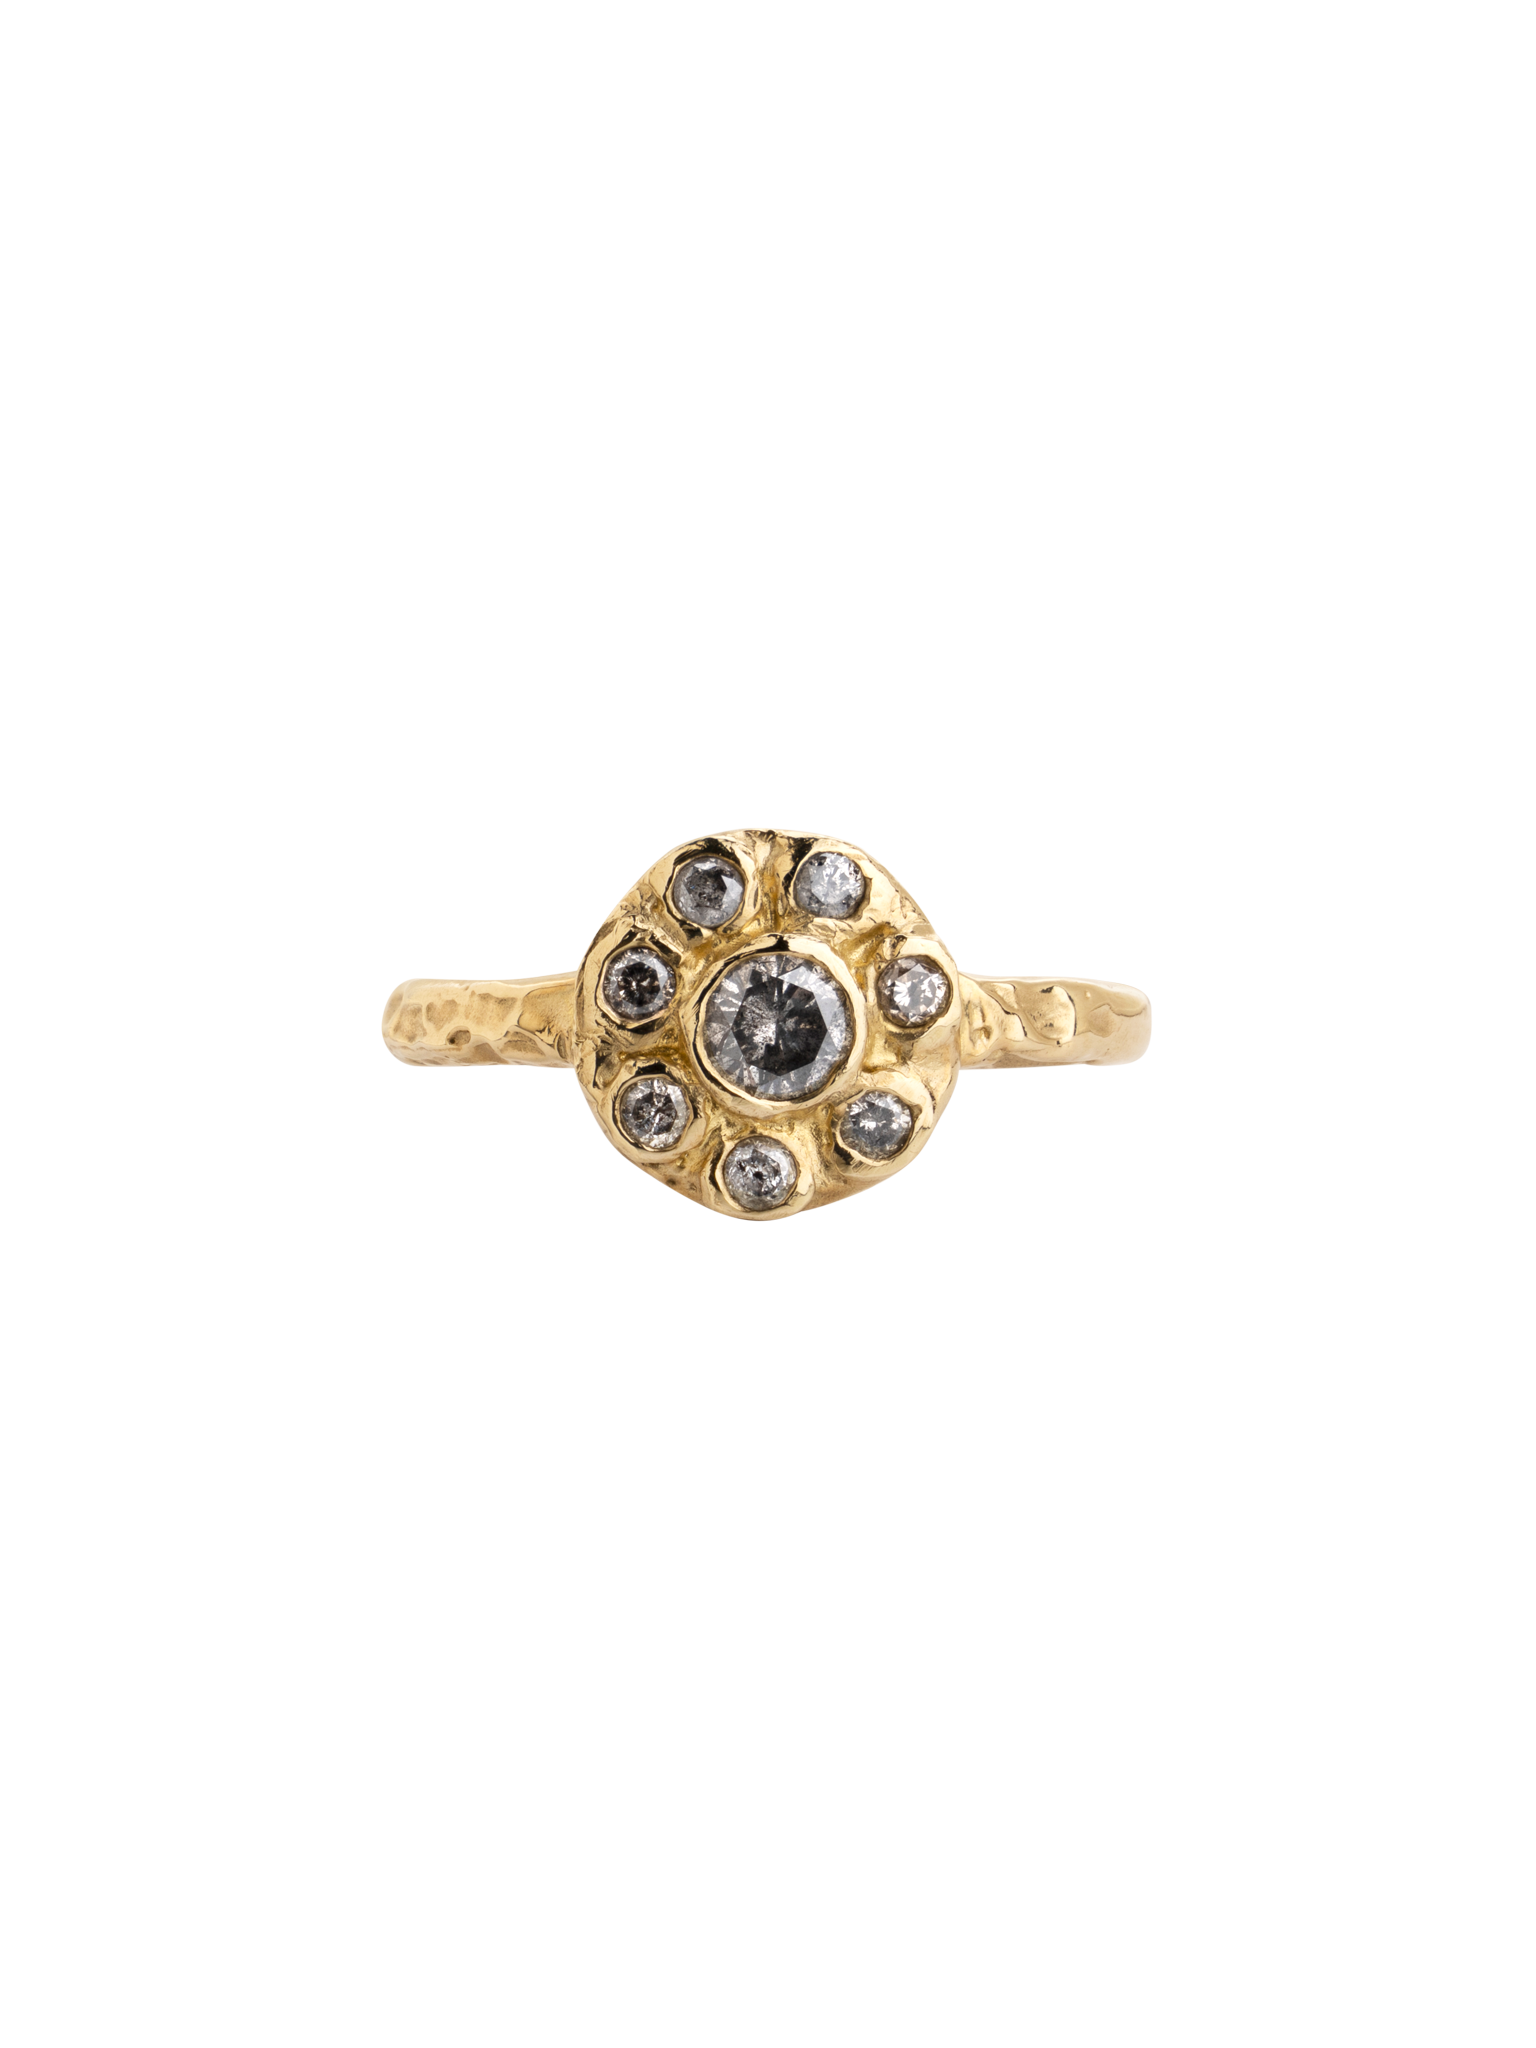 Callisto salt and pepper diamond engagement ring